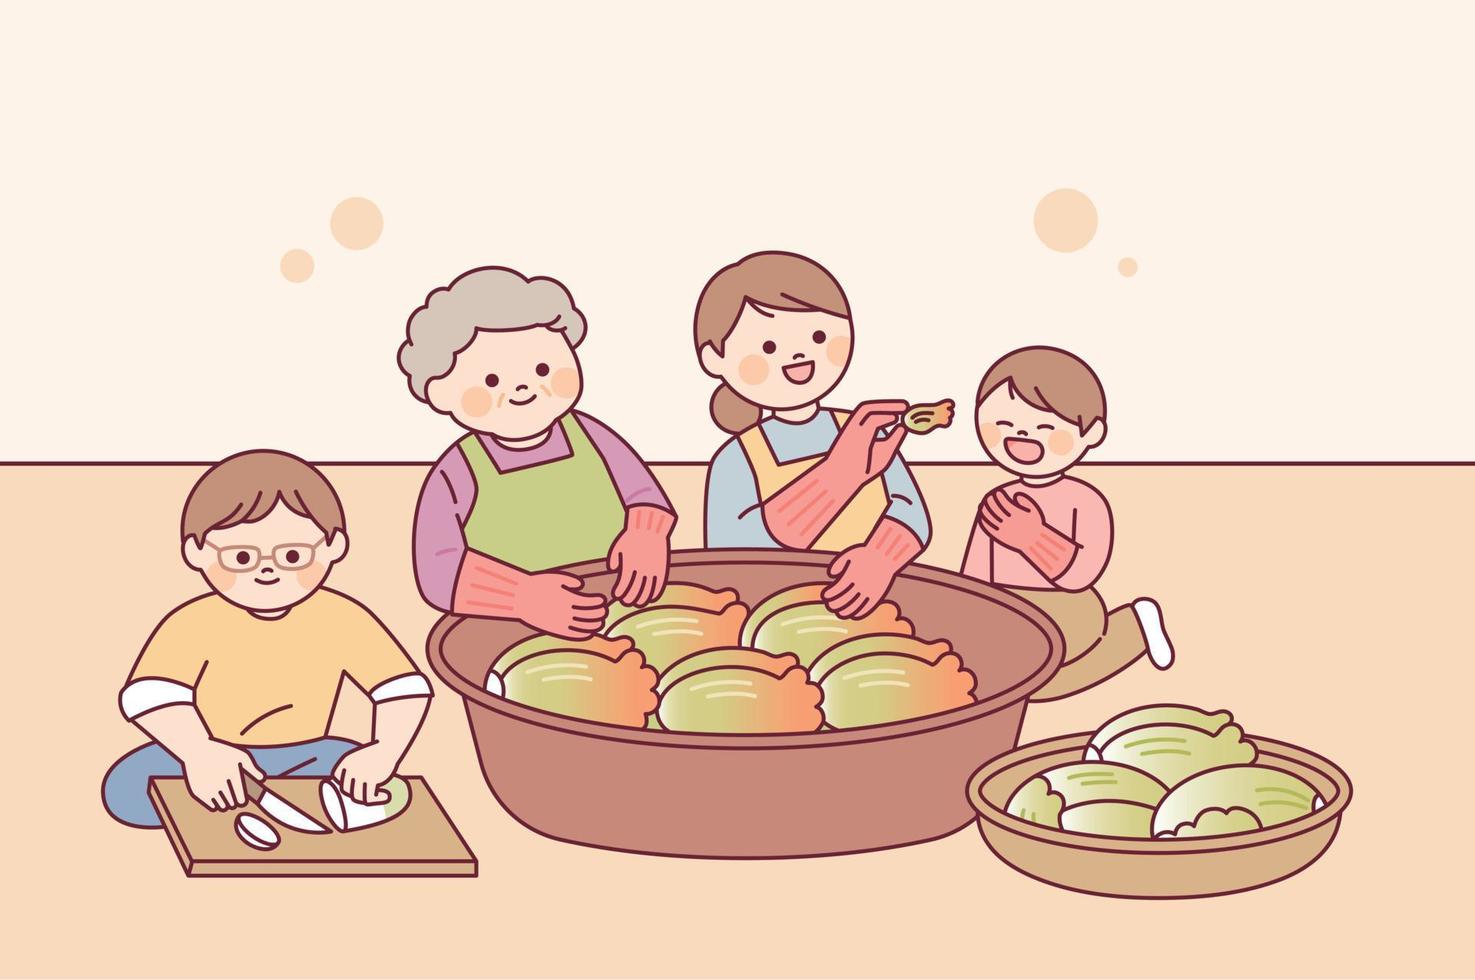 kimjang dag in Korea. de familie is maken Kimchi samen. de kind is proeverij kimchi. vector